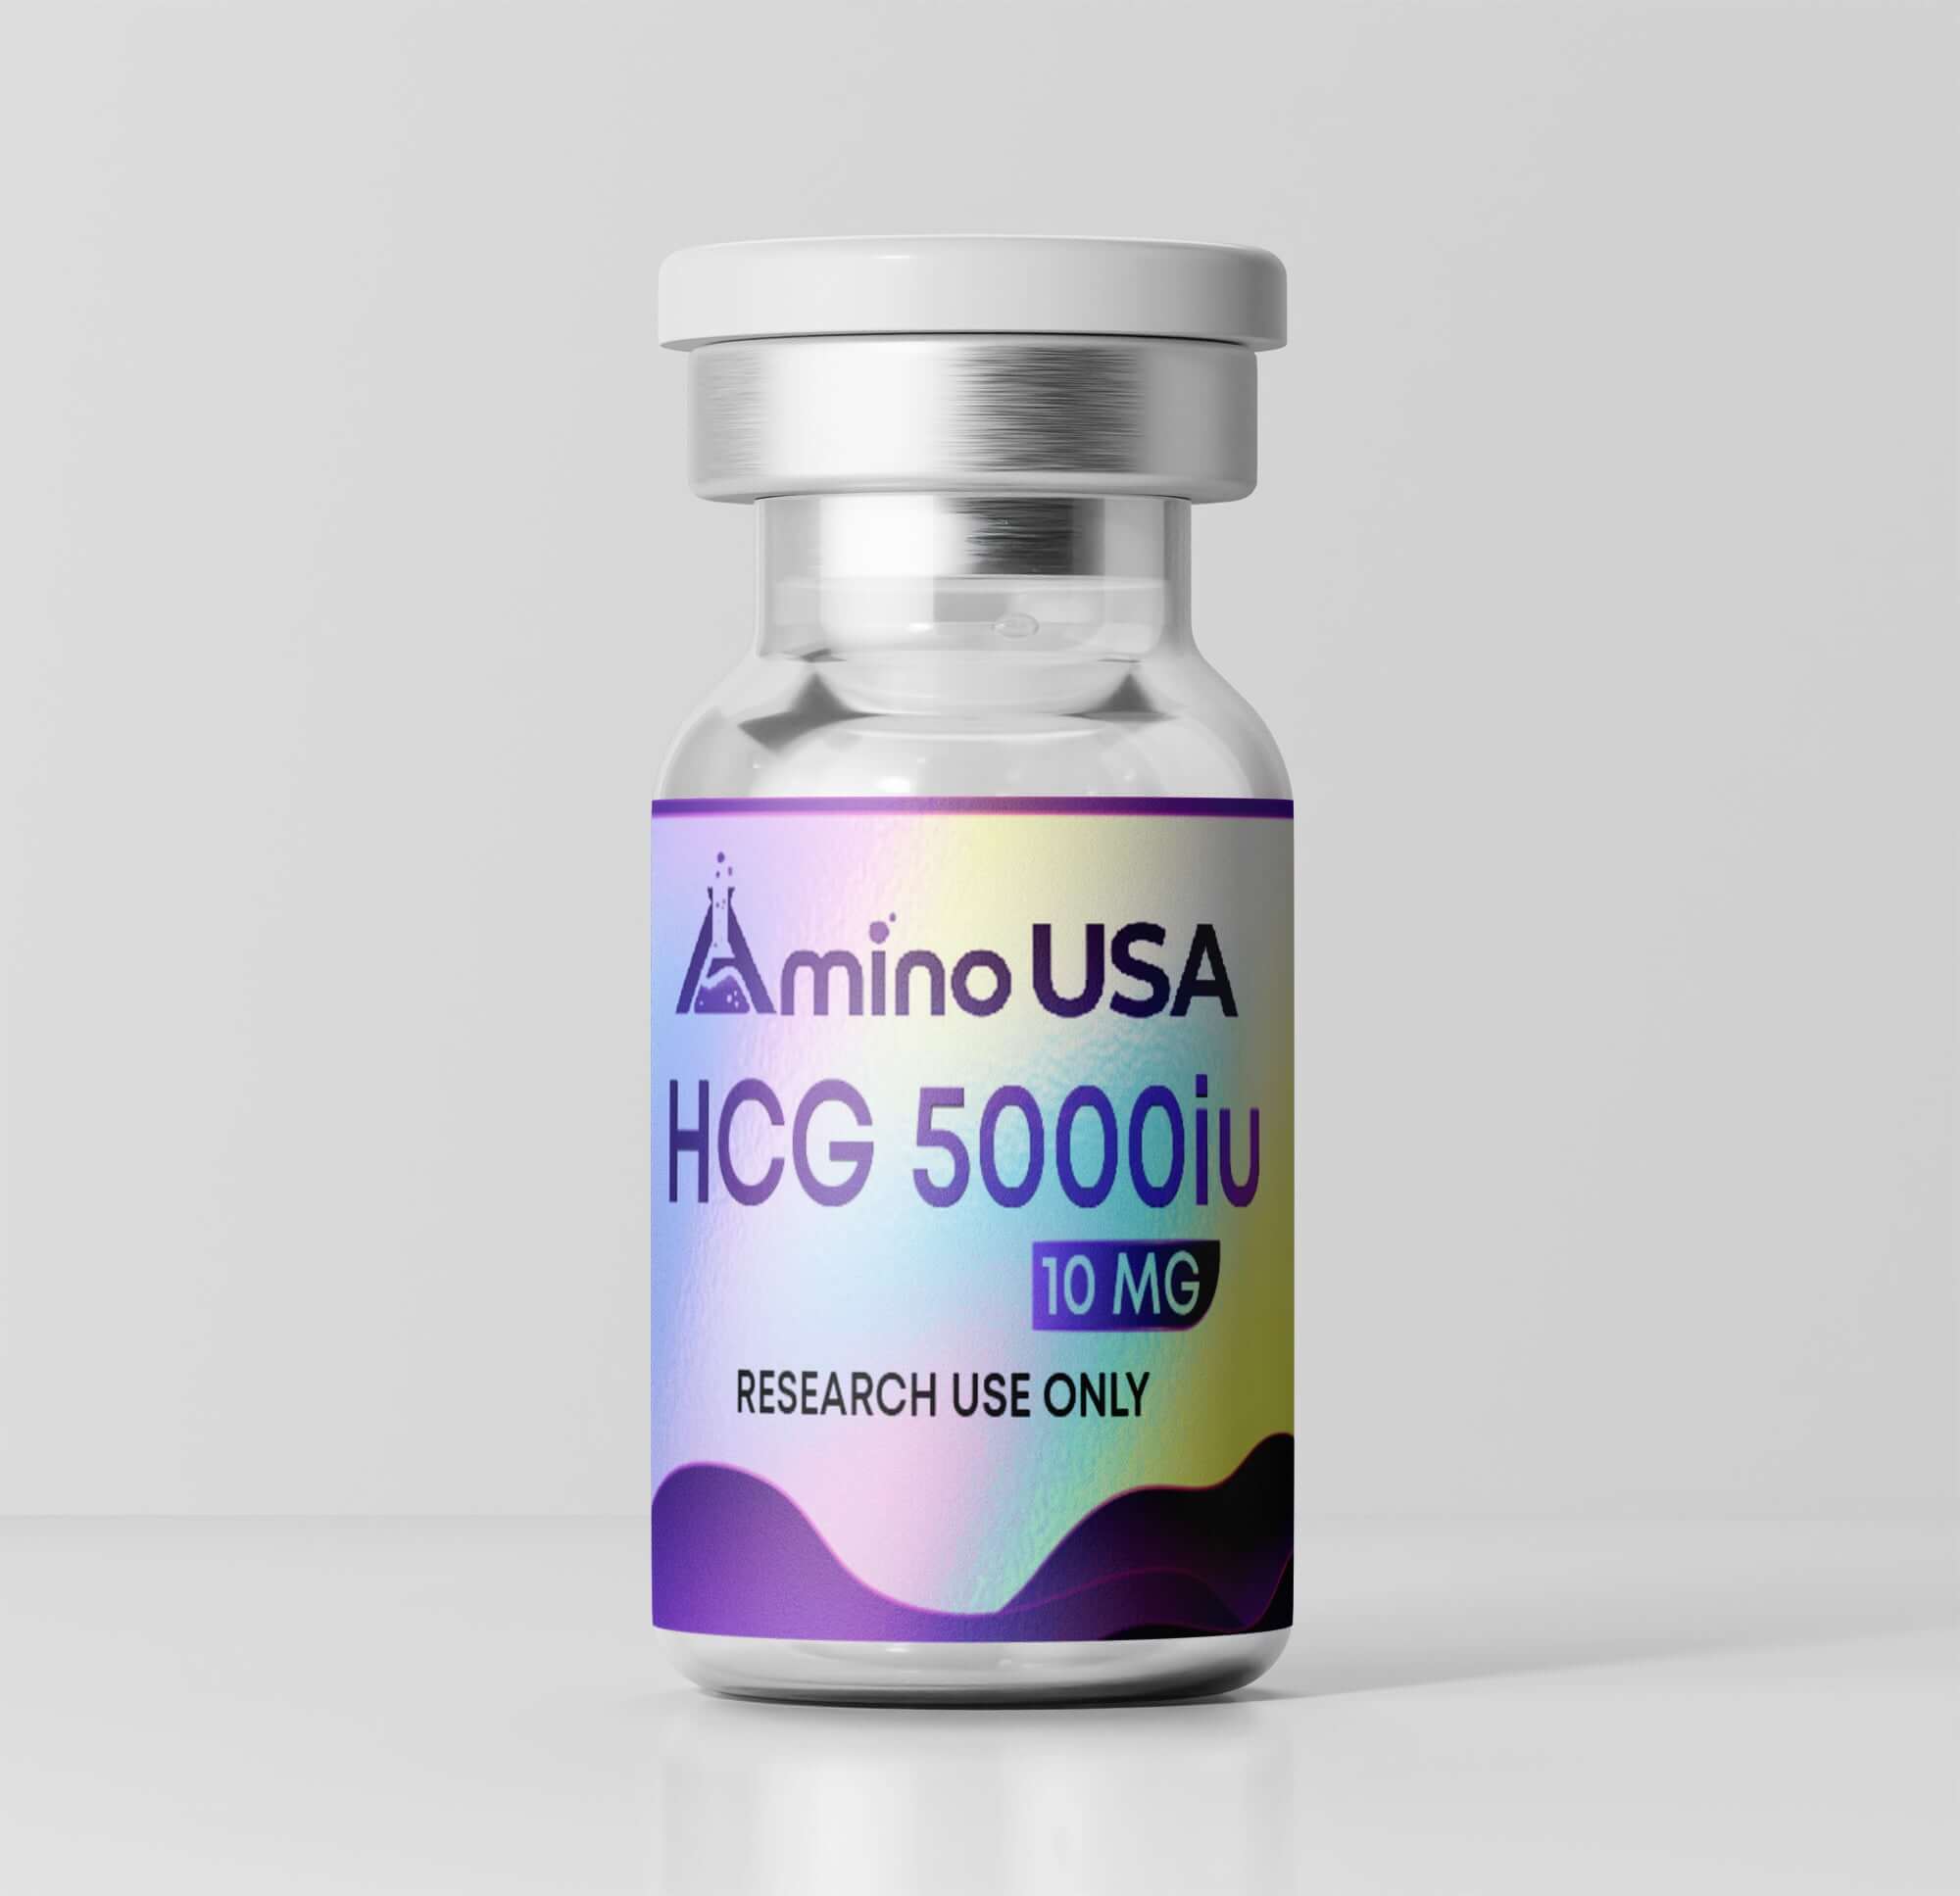 Amino USA Peptides HCG 5000iu PEP-00020